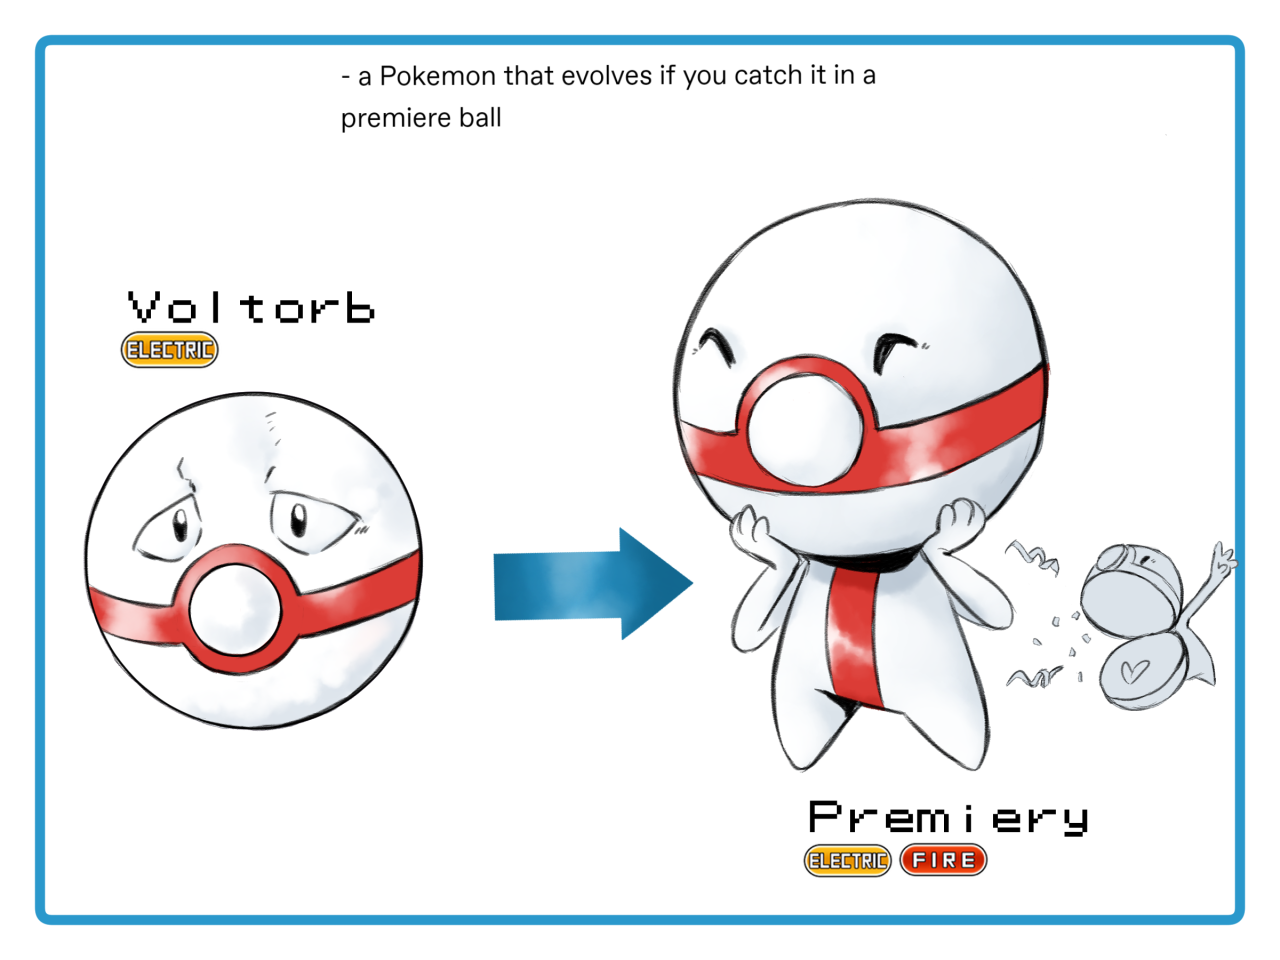 EVOLUTION] Voltorb evolving into Electrode in Pokemon Go 